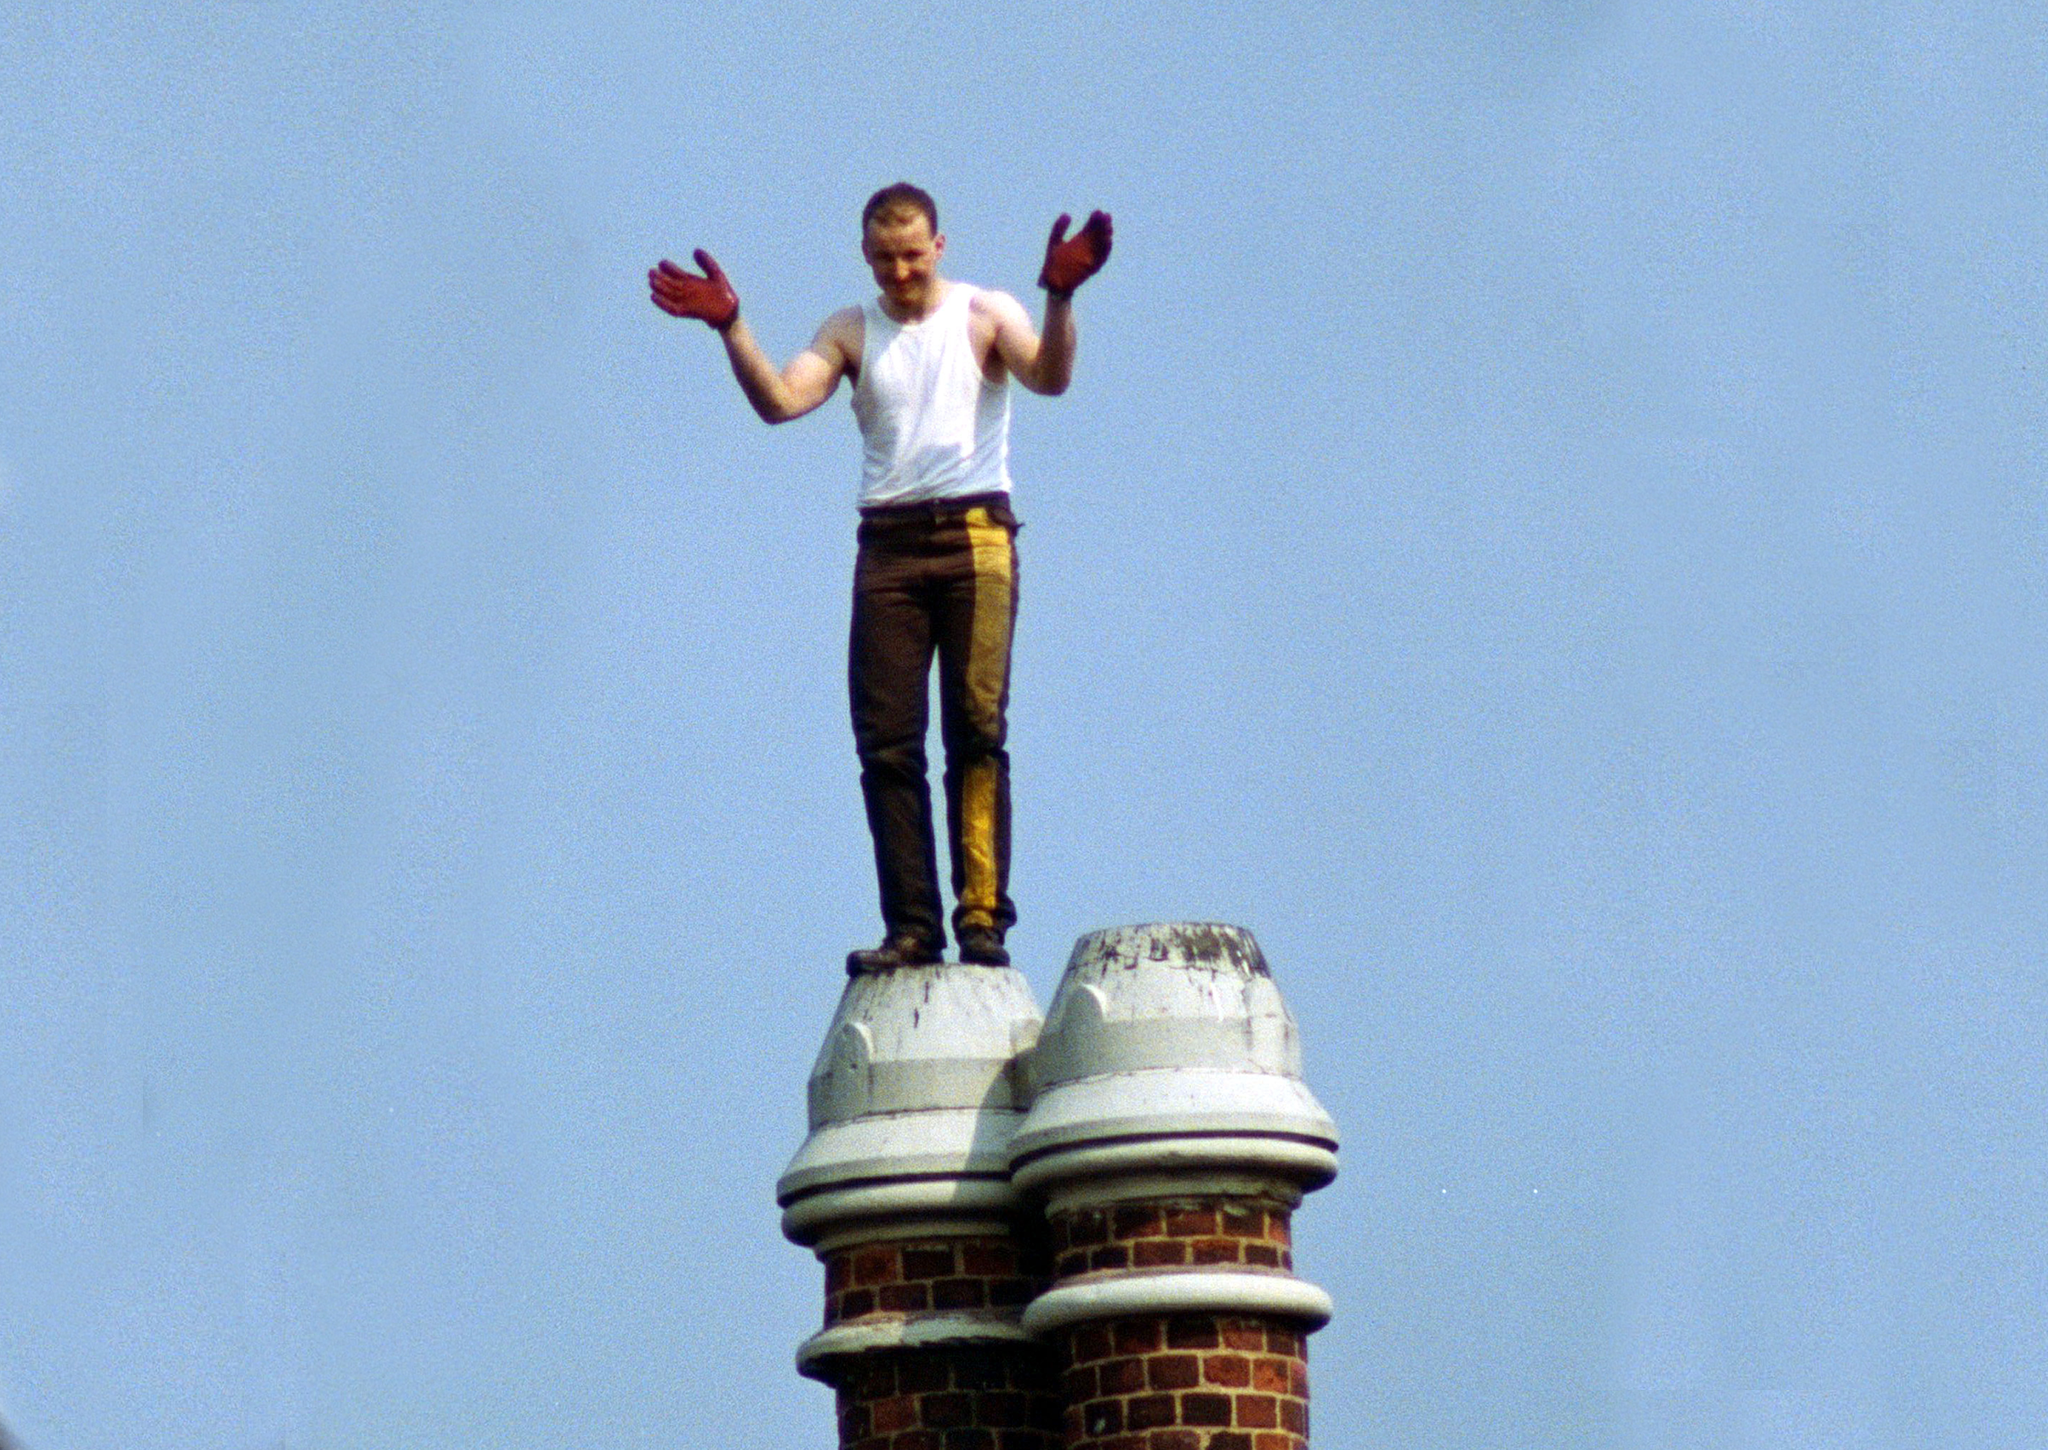 A prisoner stands atop a chimney during the Strangeways Prison riot in 1990